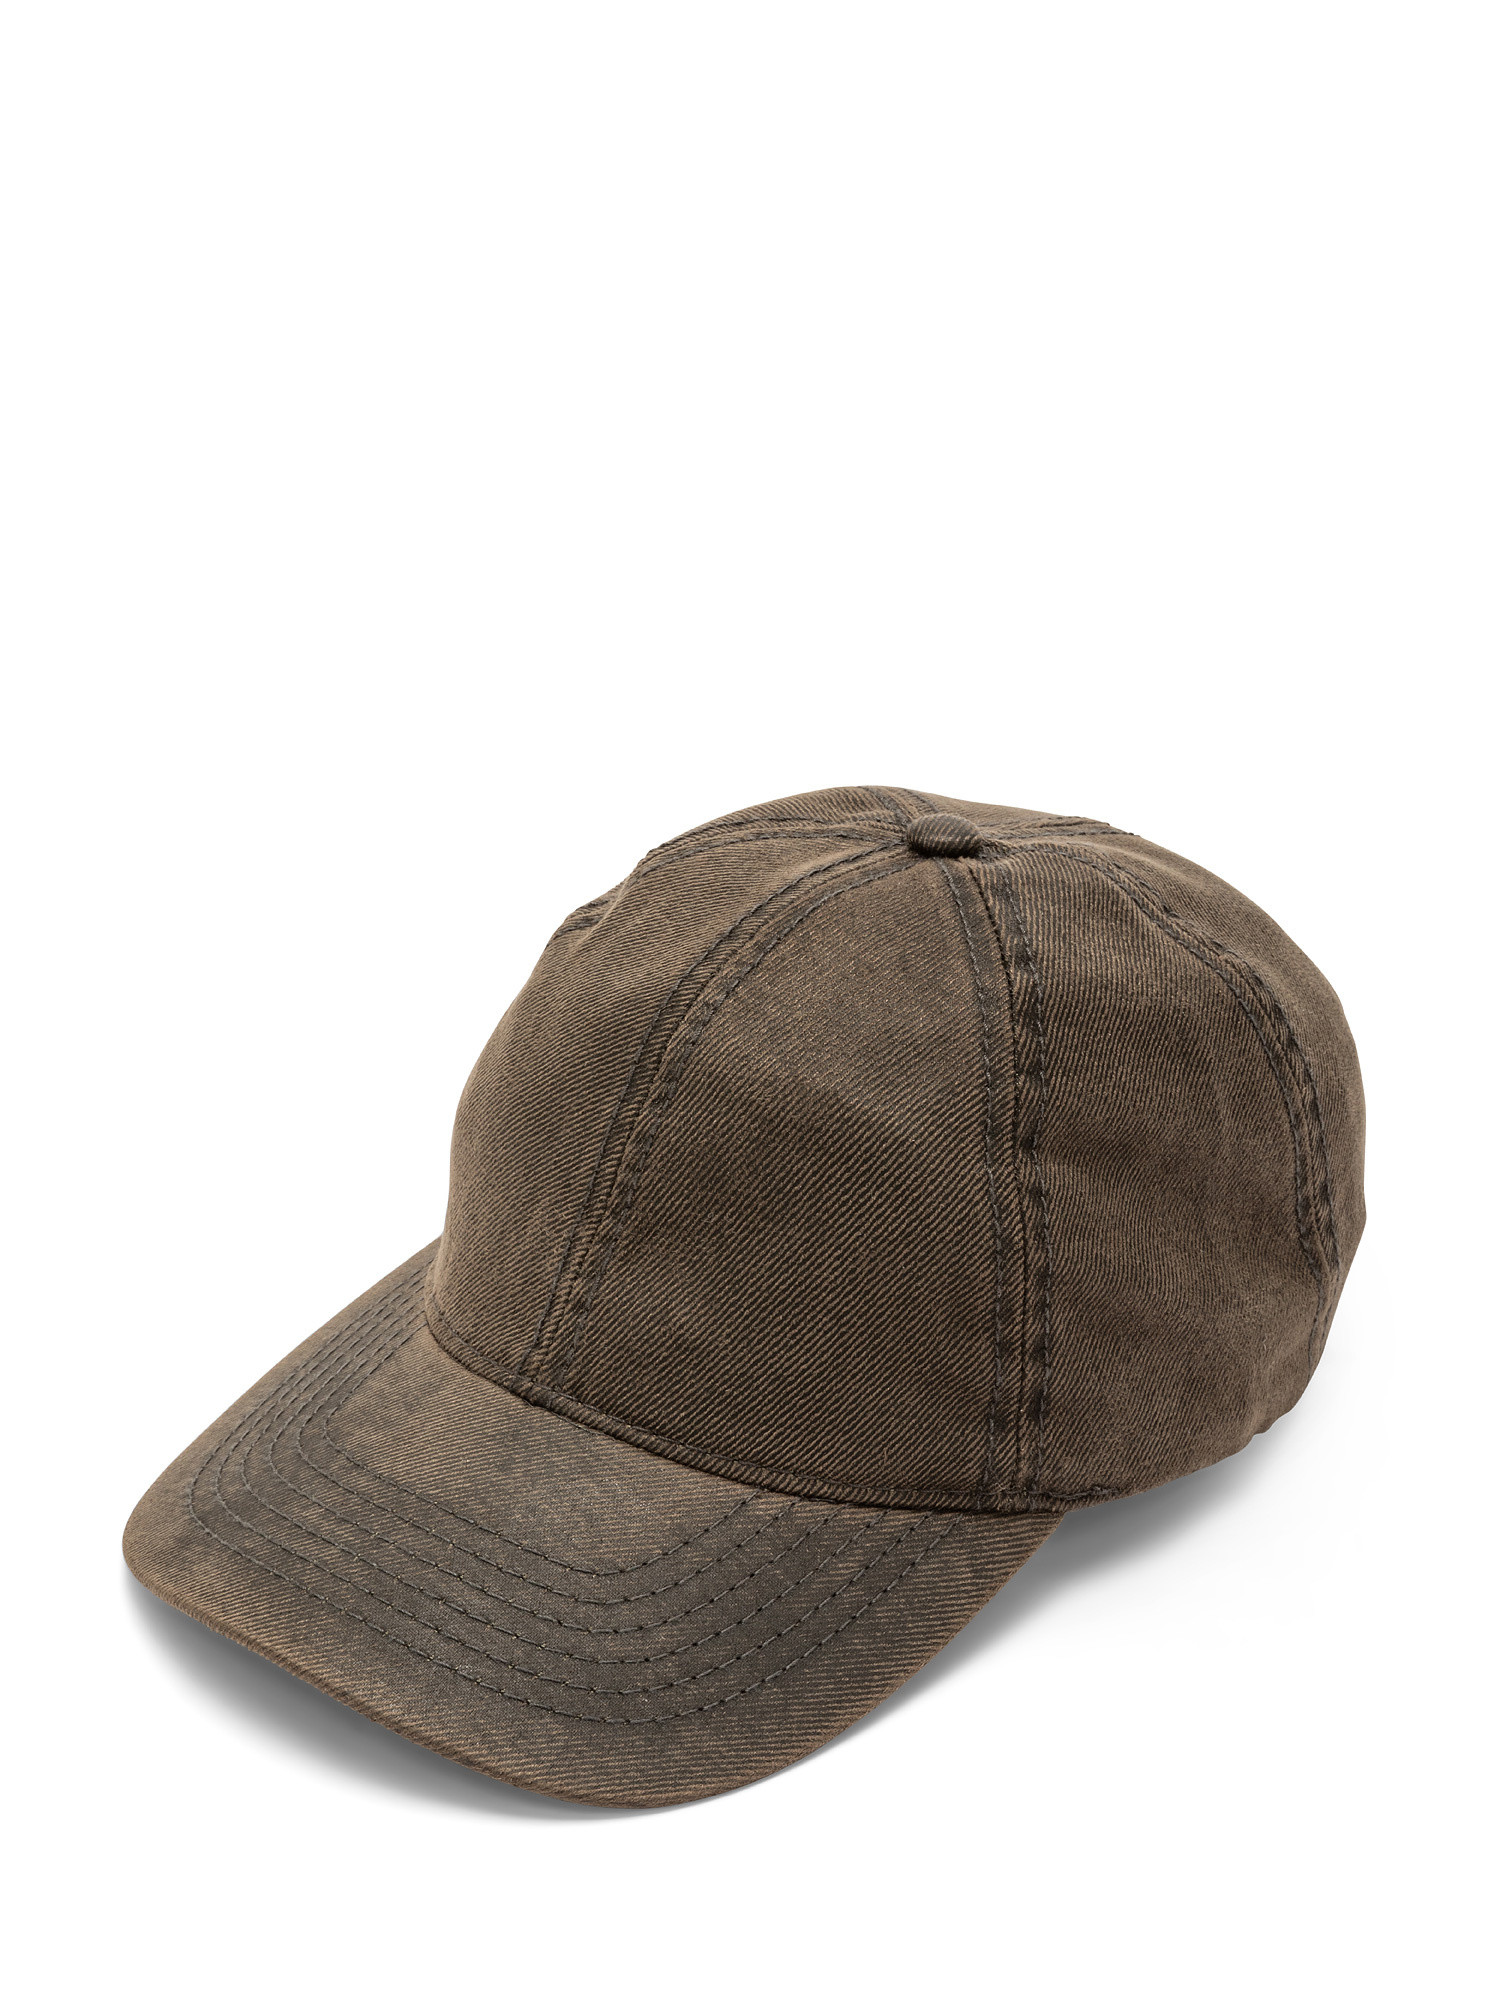 Baseball hat, Brown, large image number 0